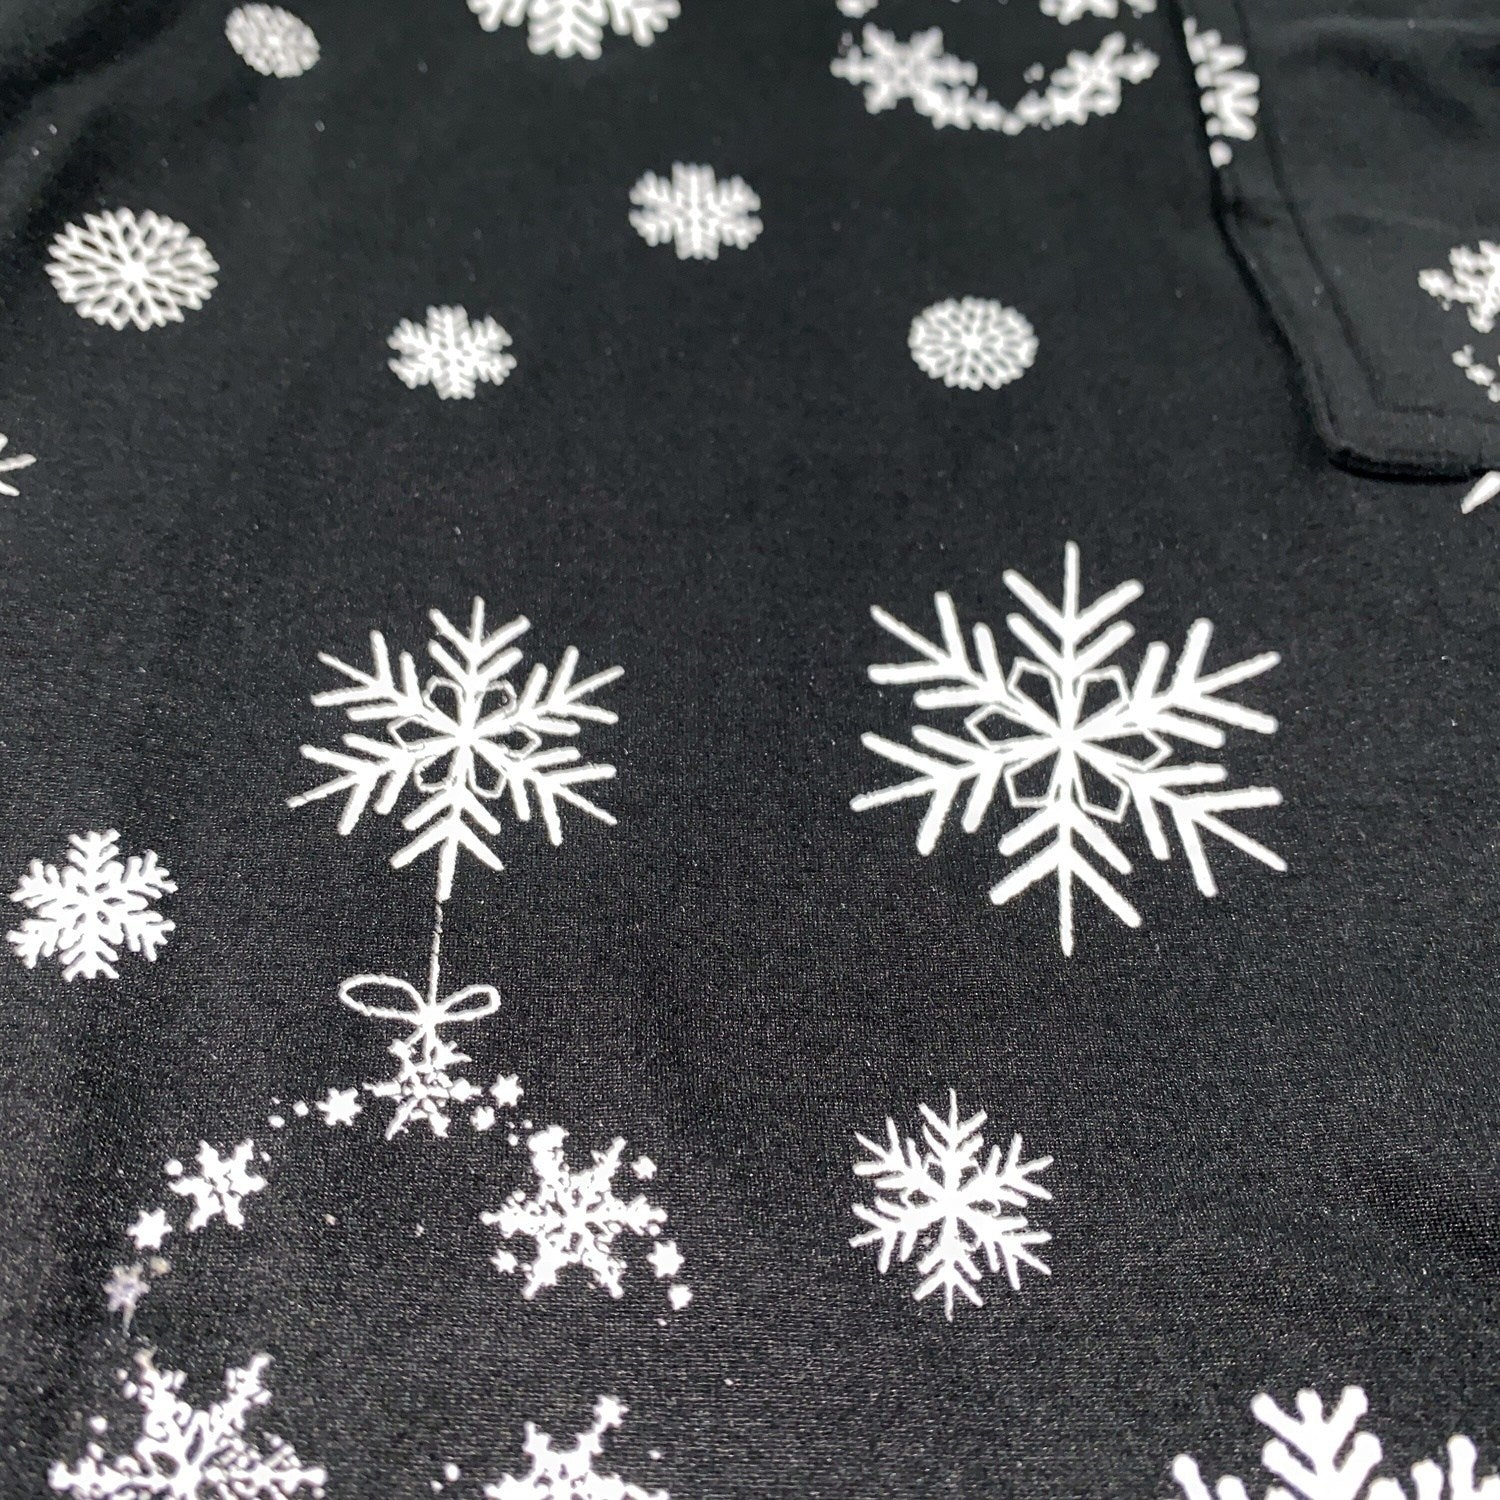 Christmas Snowflake Leggings Black White Leggings with Pockets